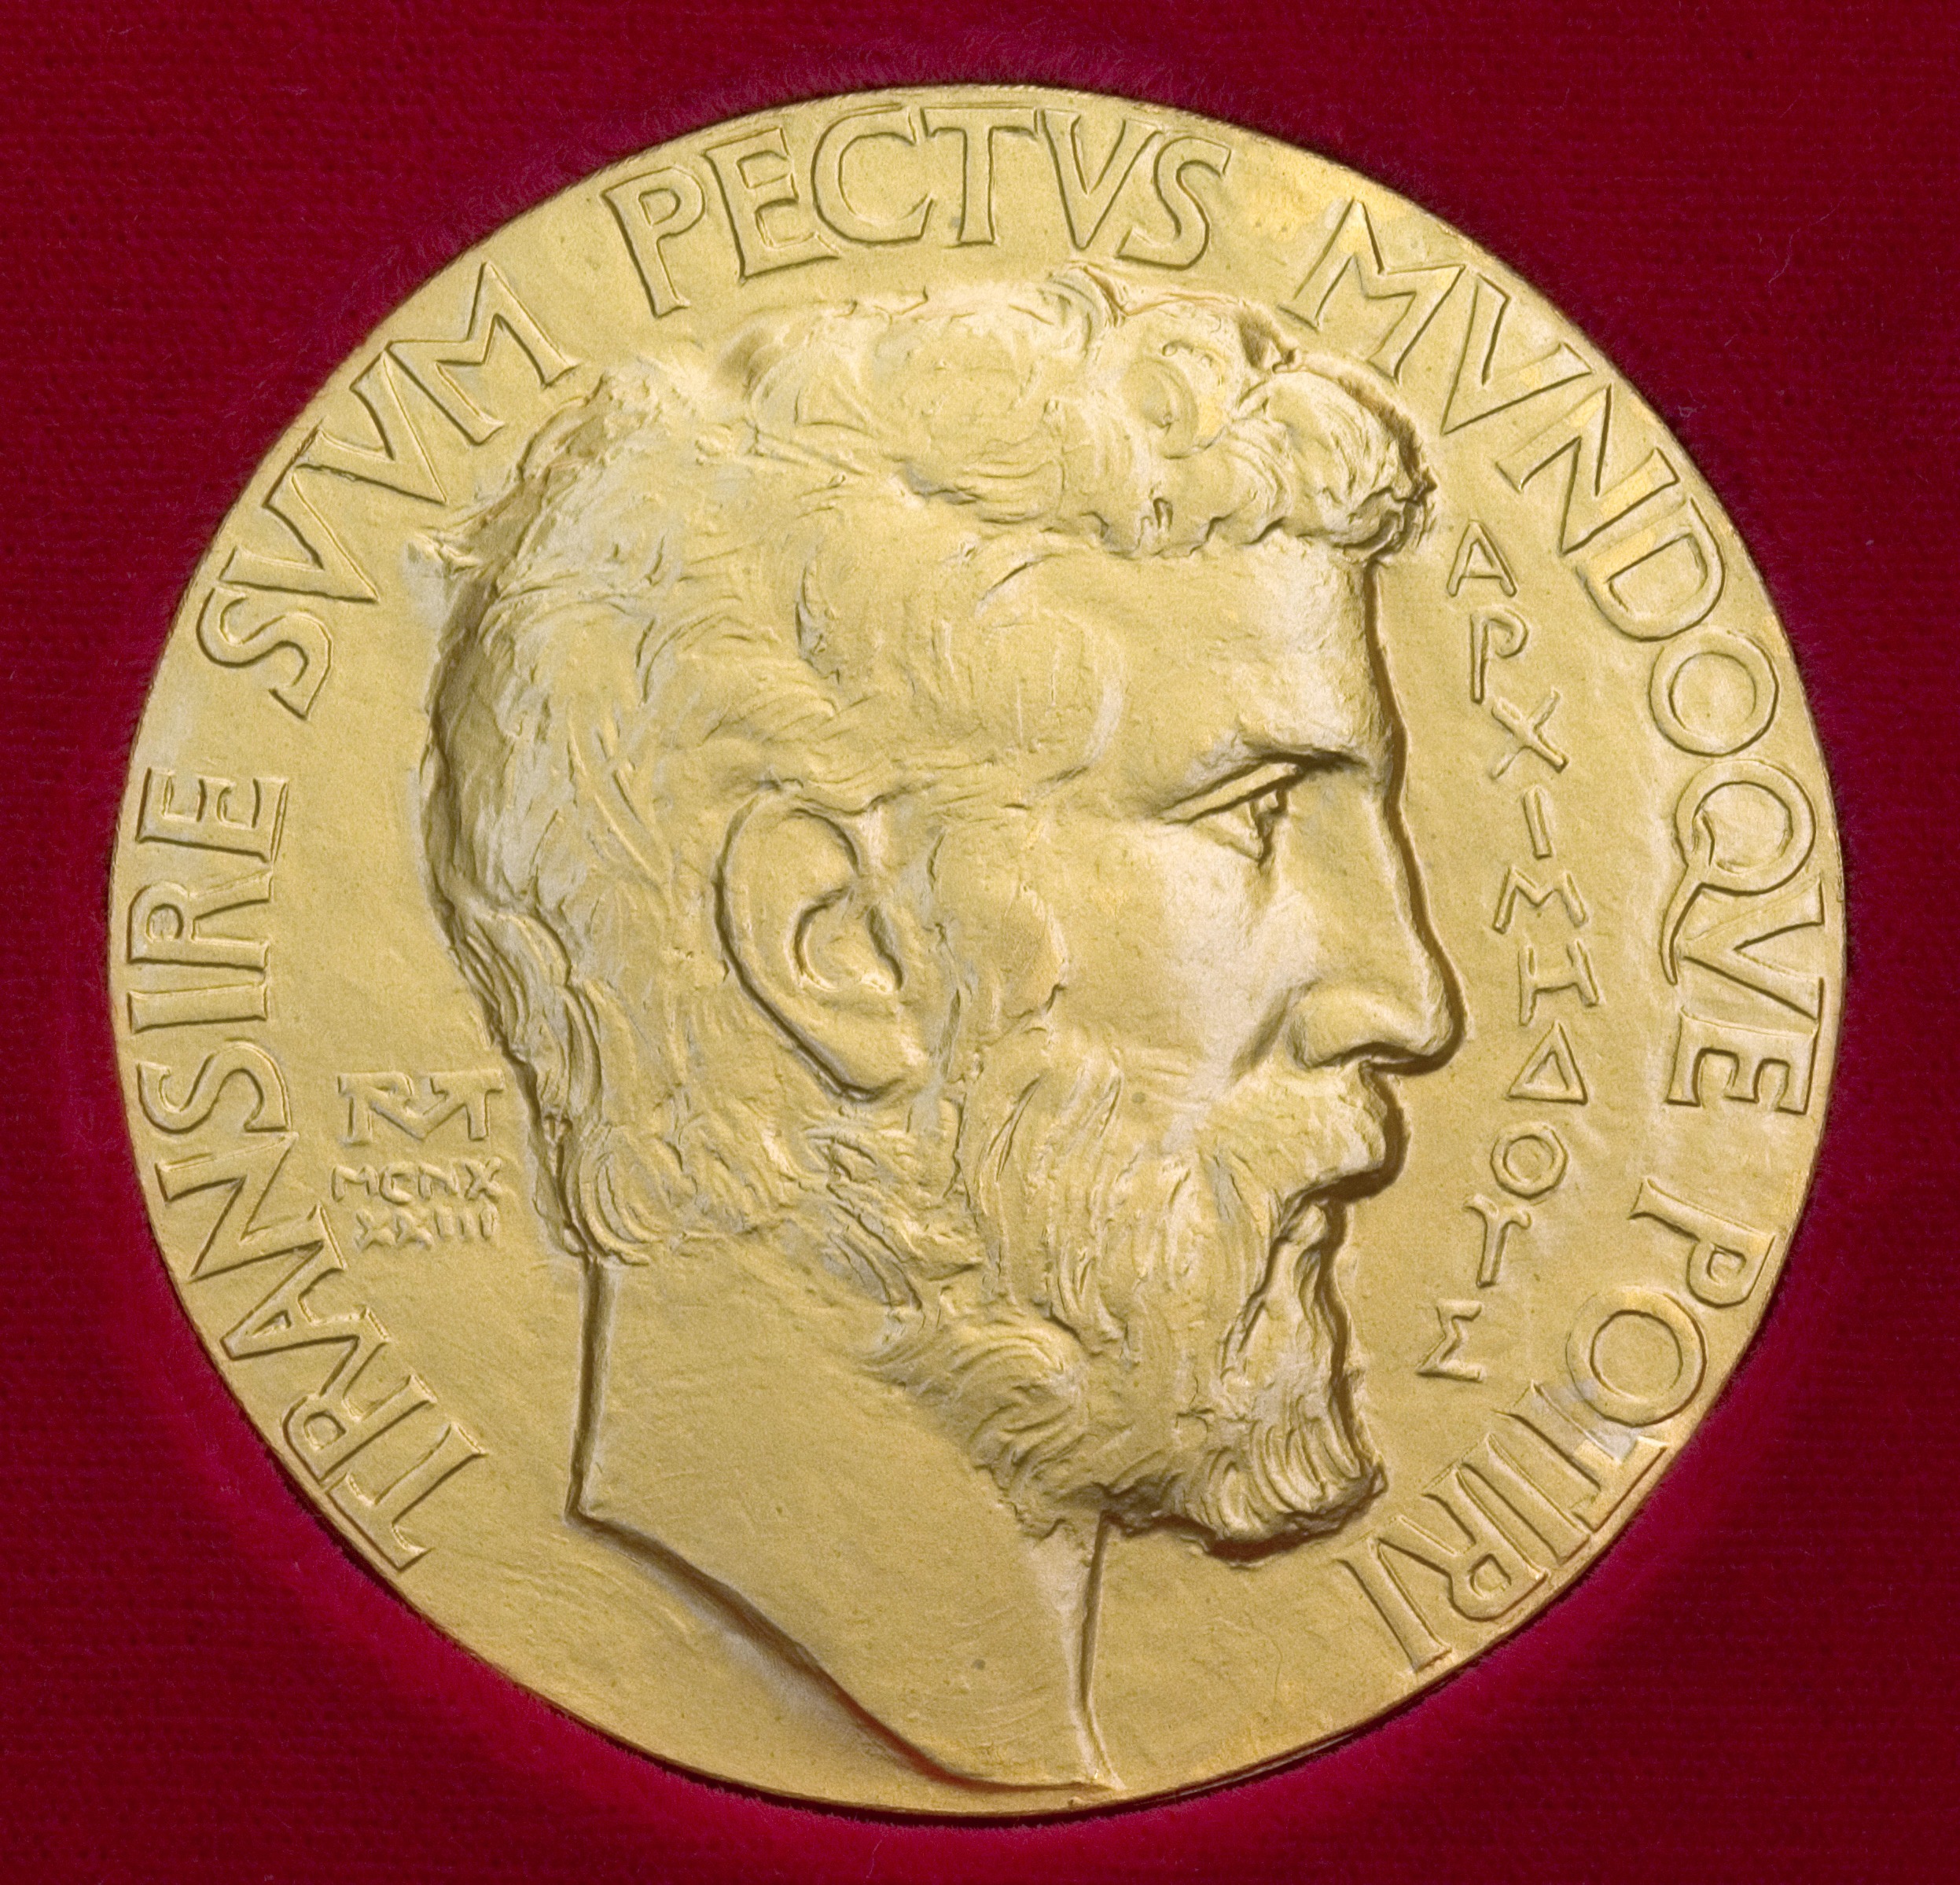 IMU Announced Fields Medal Awardees, 2022